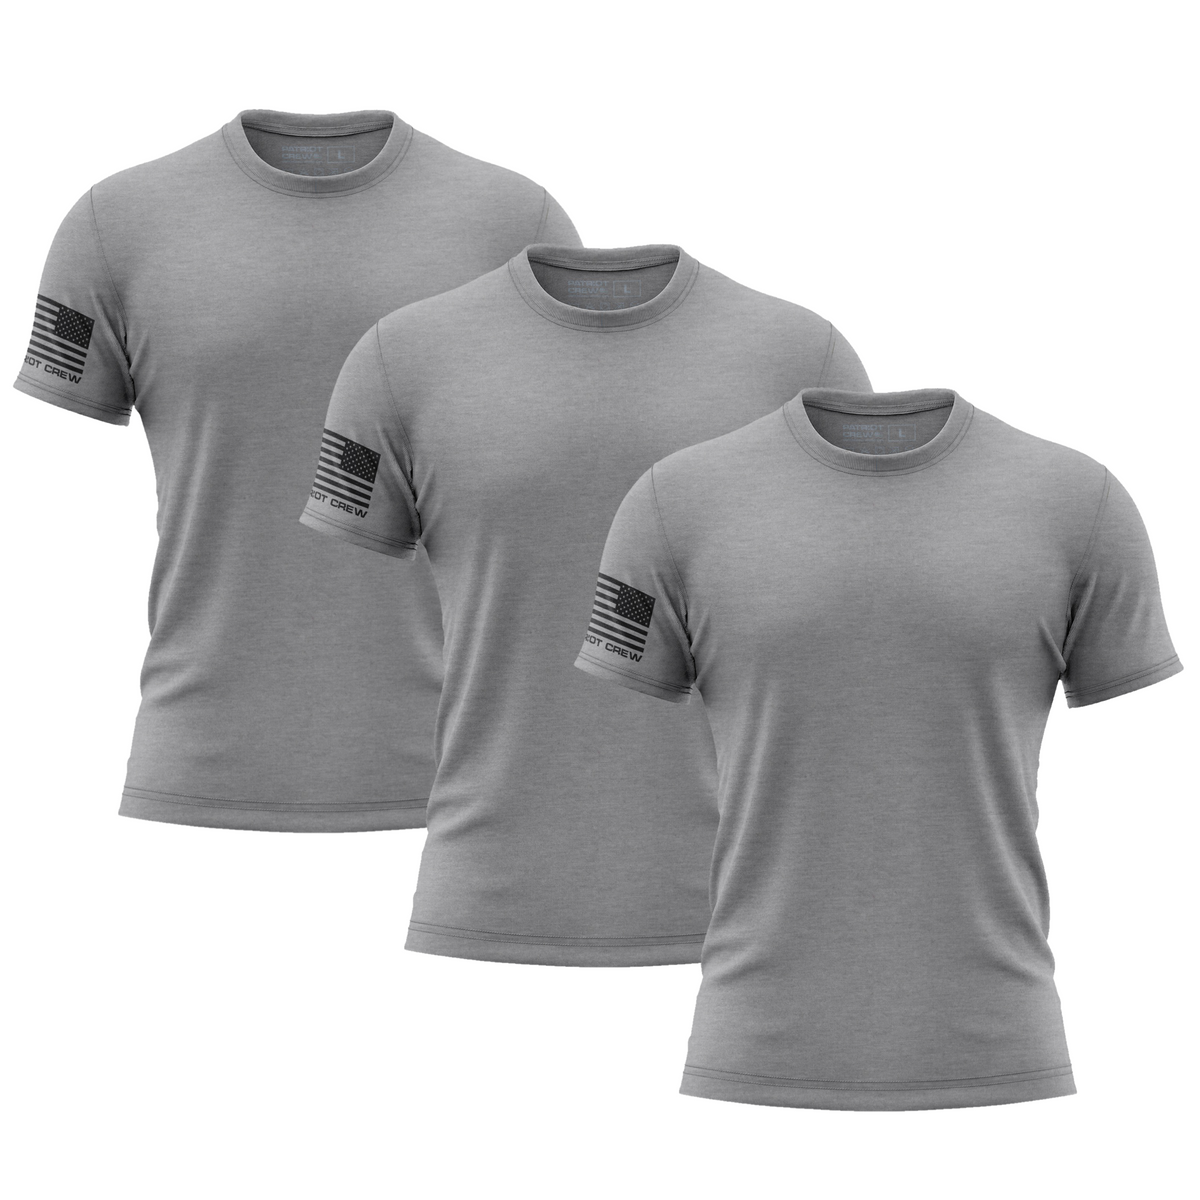 Heather Grey T-Shirt (3 Pack)